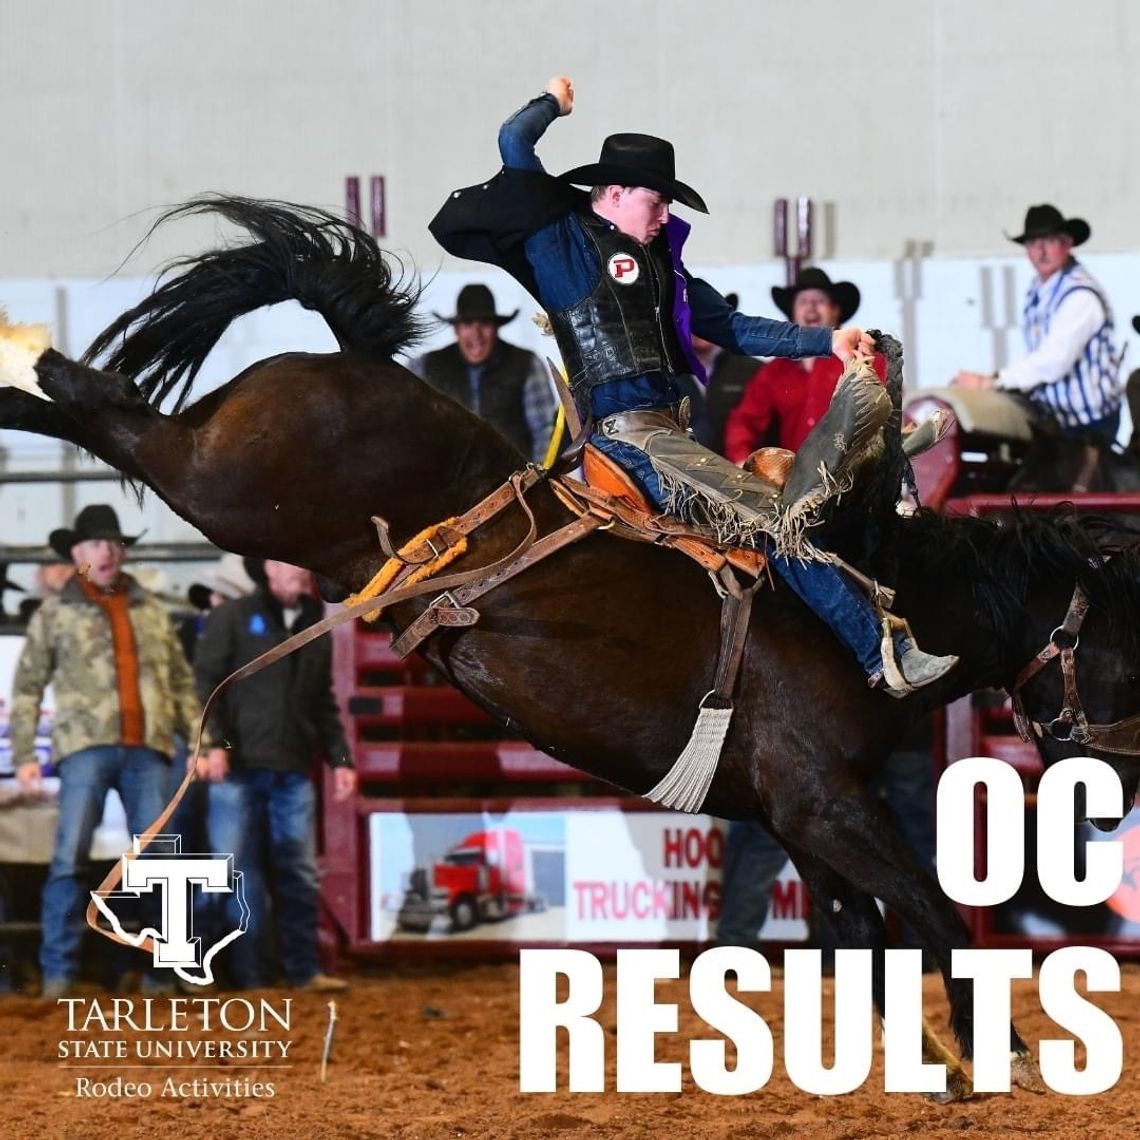 Tarleton State Rodeo Team dominates at Odessa College